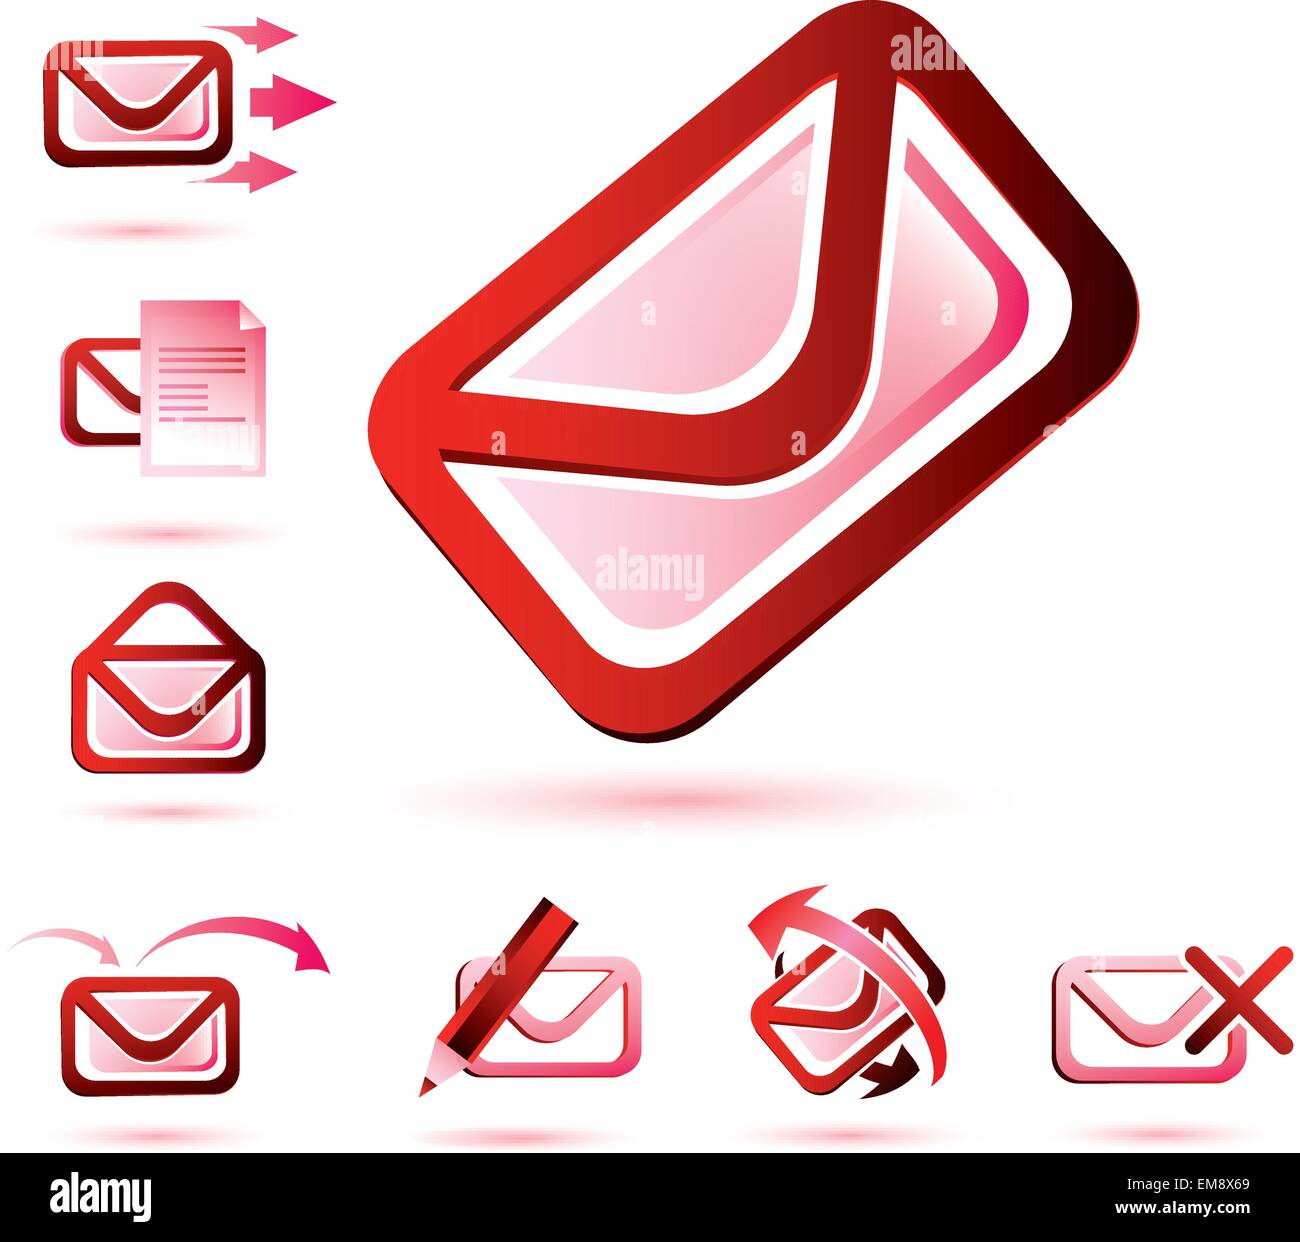 Gmail correo electrónico google internet iconos de la computadora, gmail,  amor, texto, corazón png